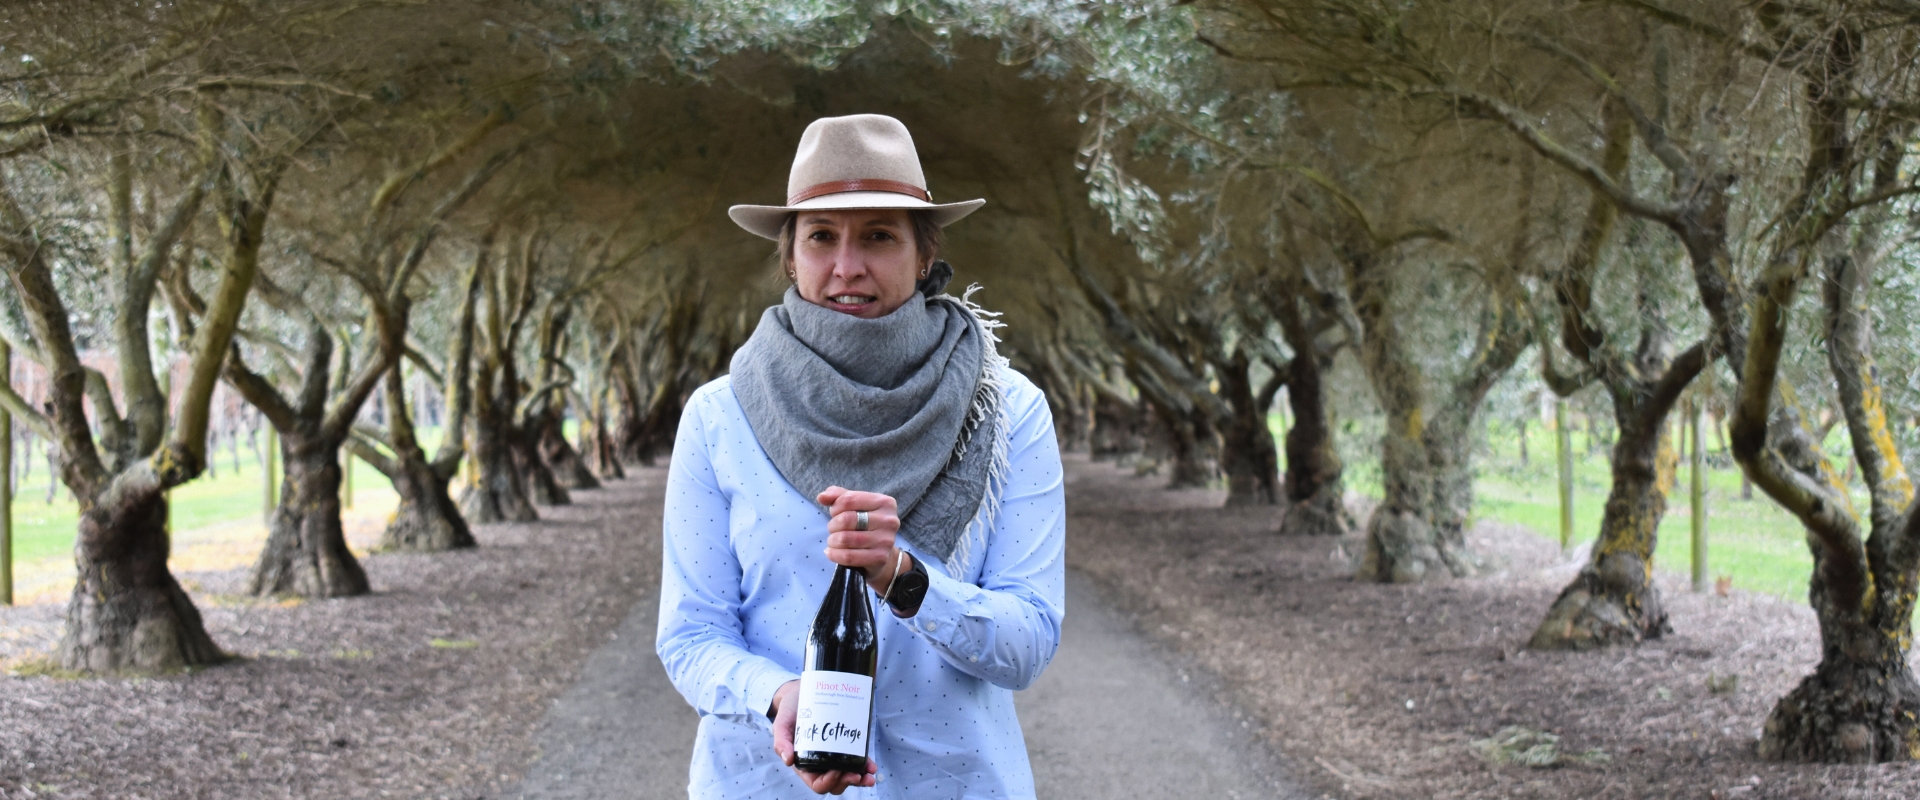 female winemaker in NZ